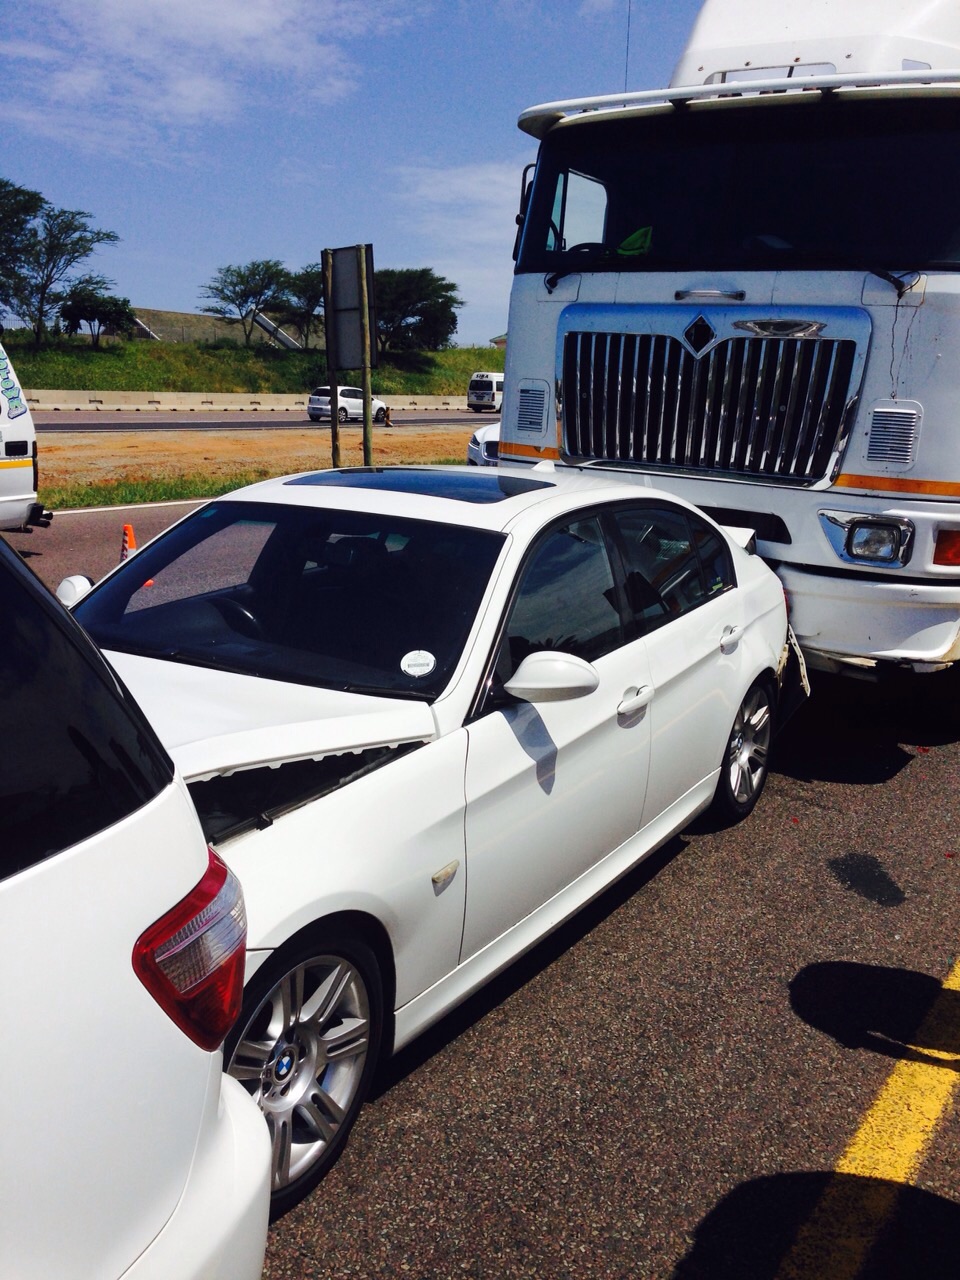 KZN N2 rear-end collision leaves five injured